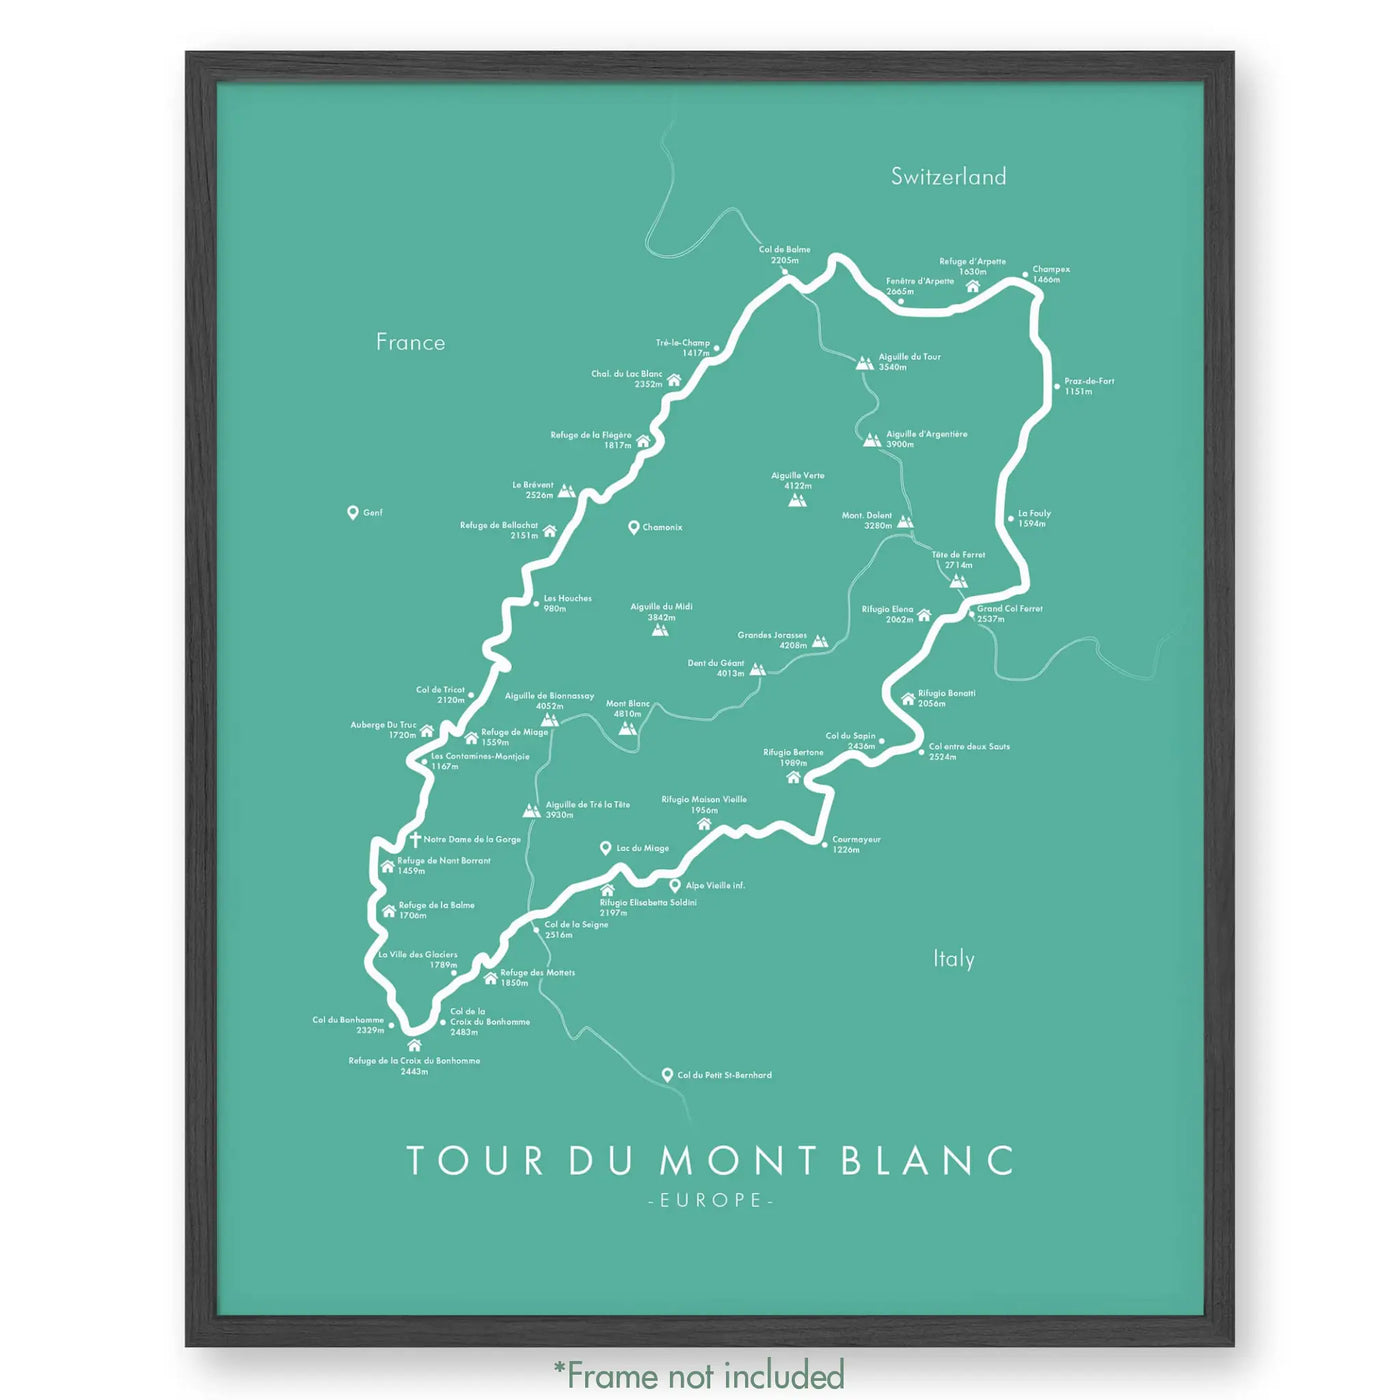 Trail Poster of Tour Du Mont Blanc - Teal